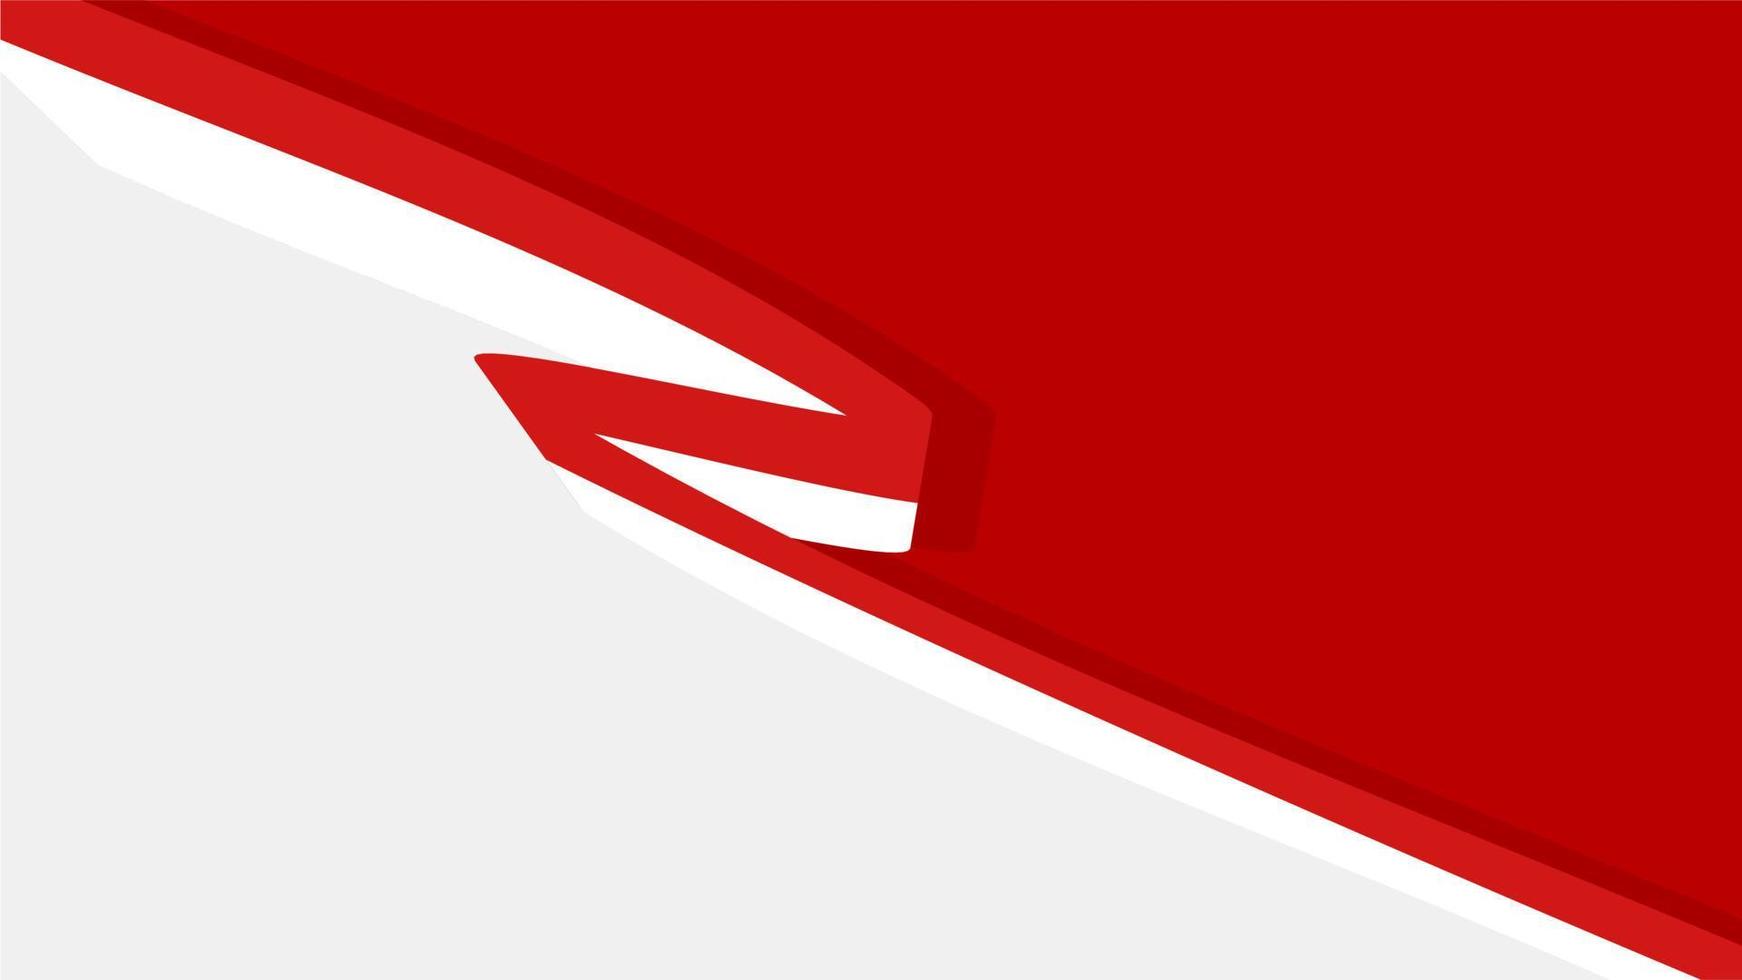 Indonesië vlag sjabloon achtergrond rood wit vector illustratie